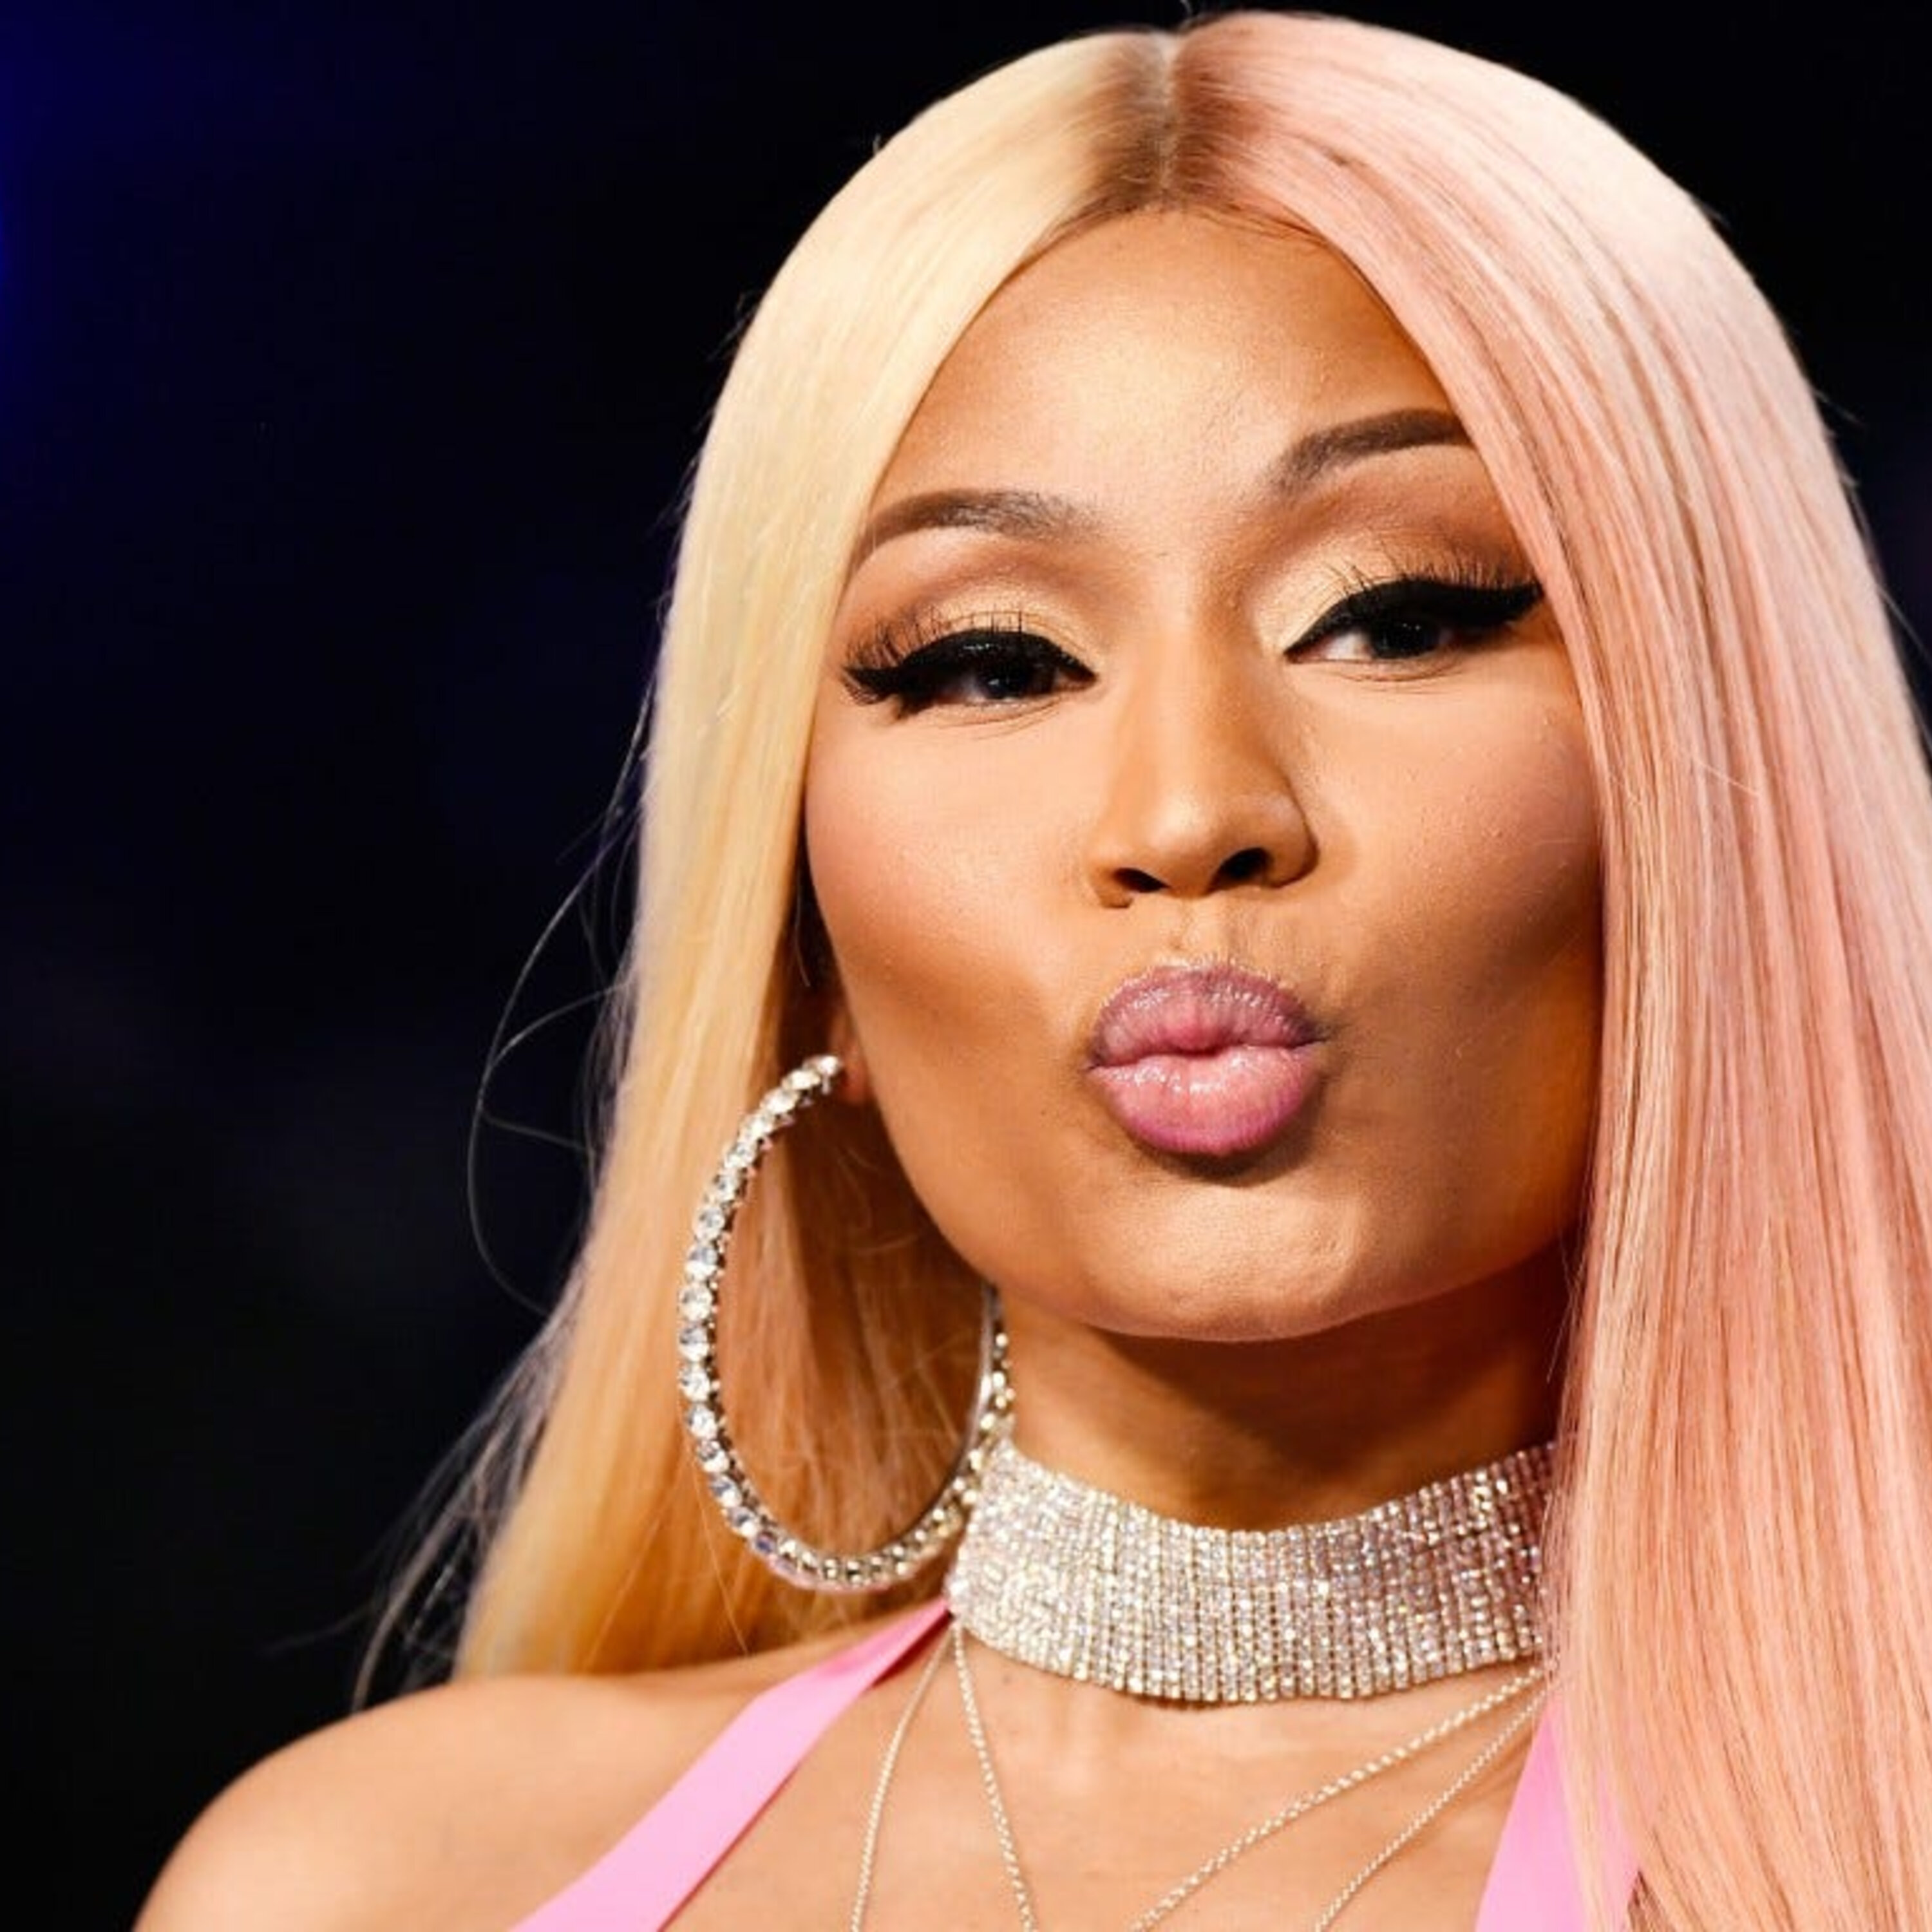 Nicki Minaj Has Announced Her Retirement From Music